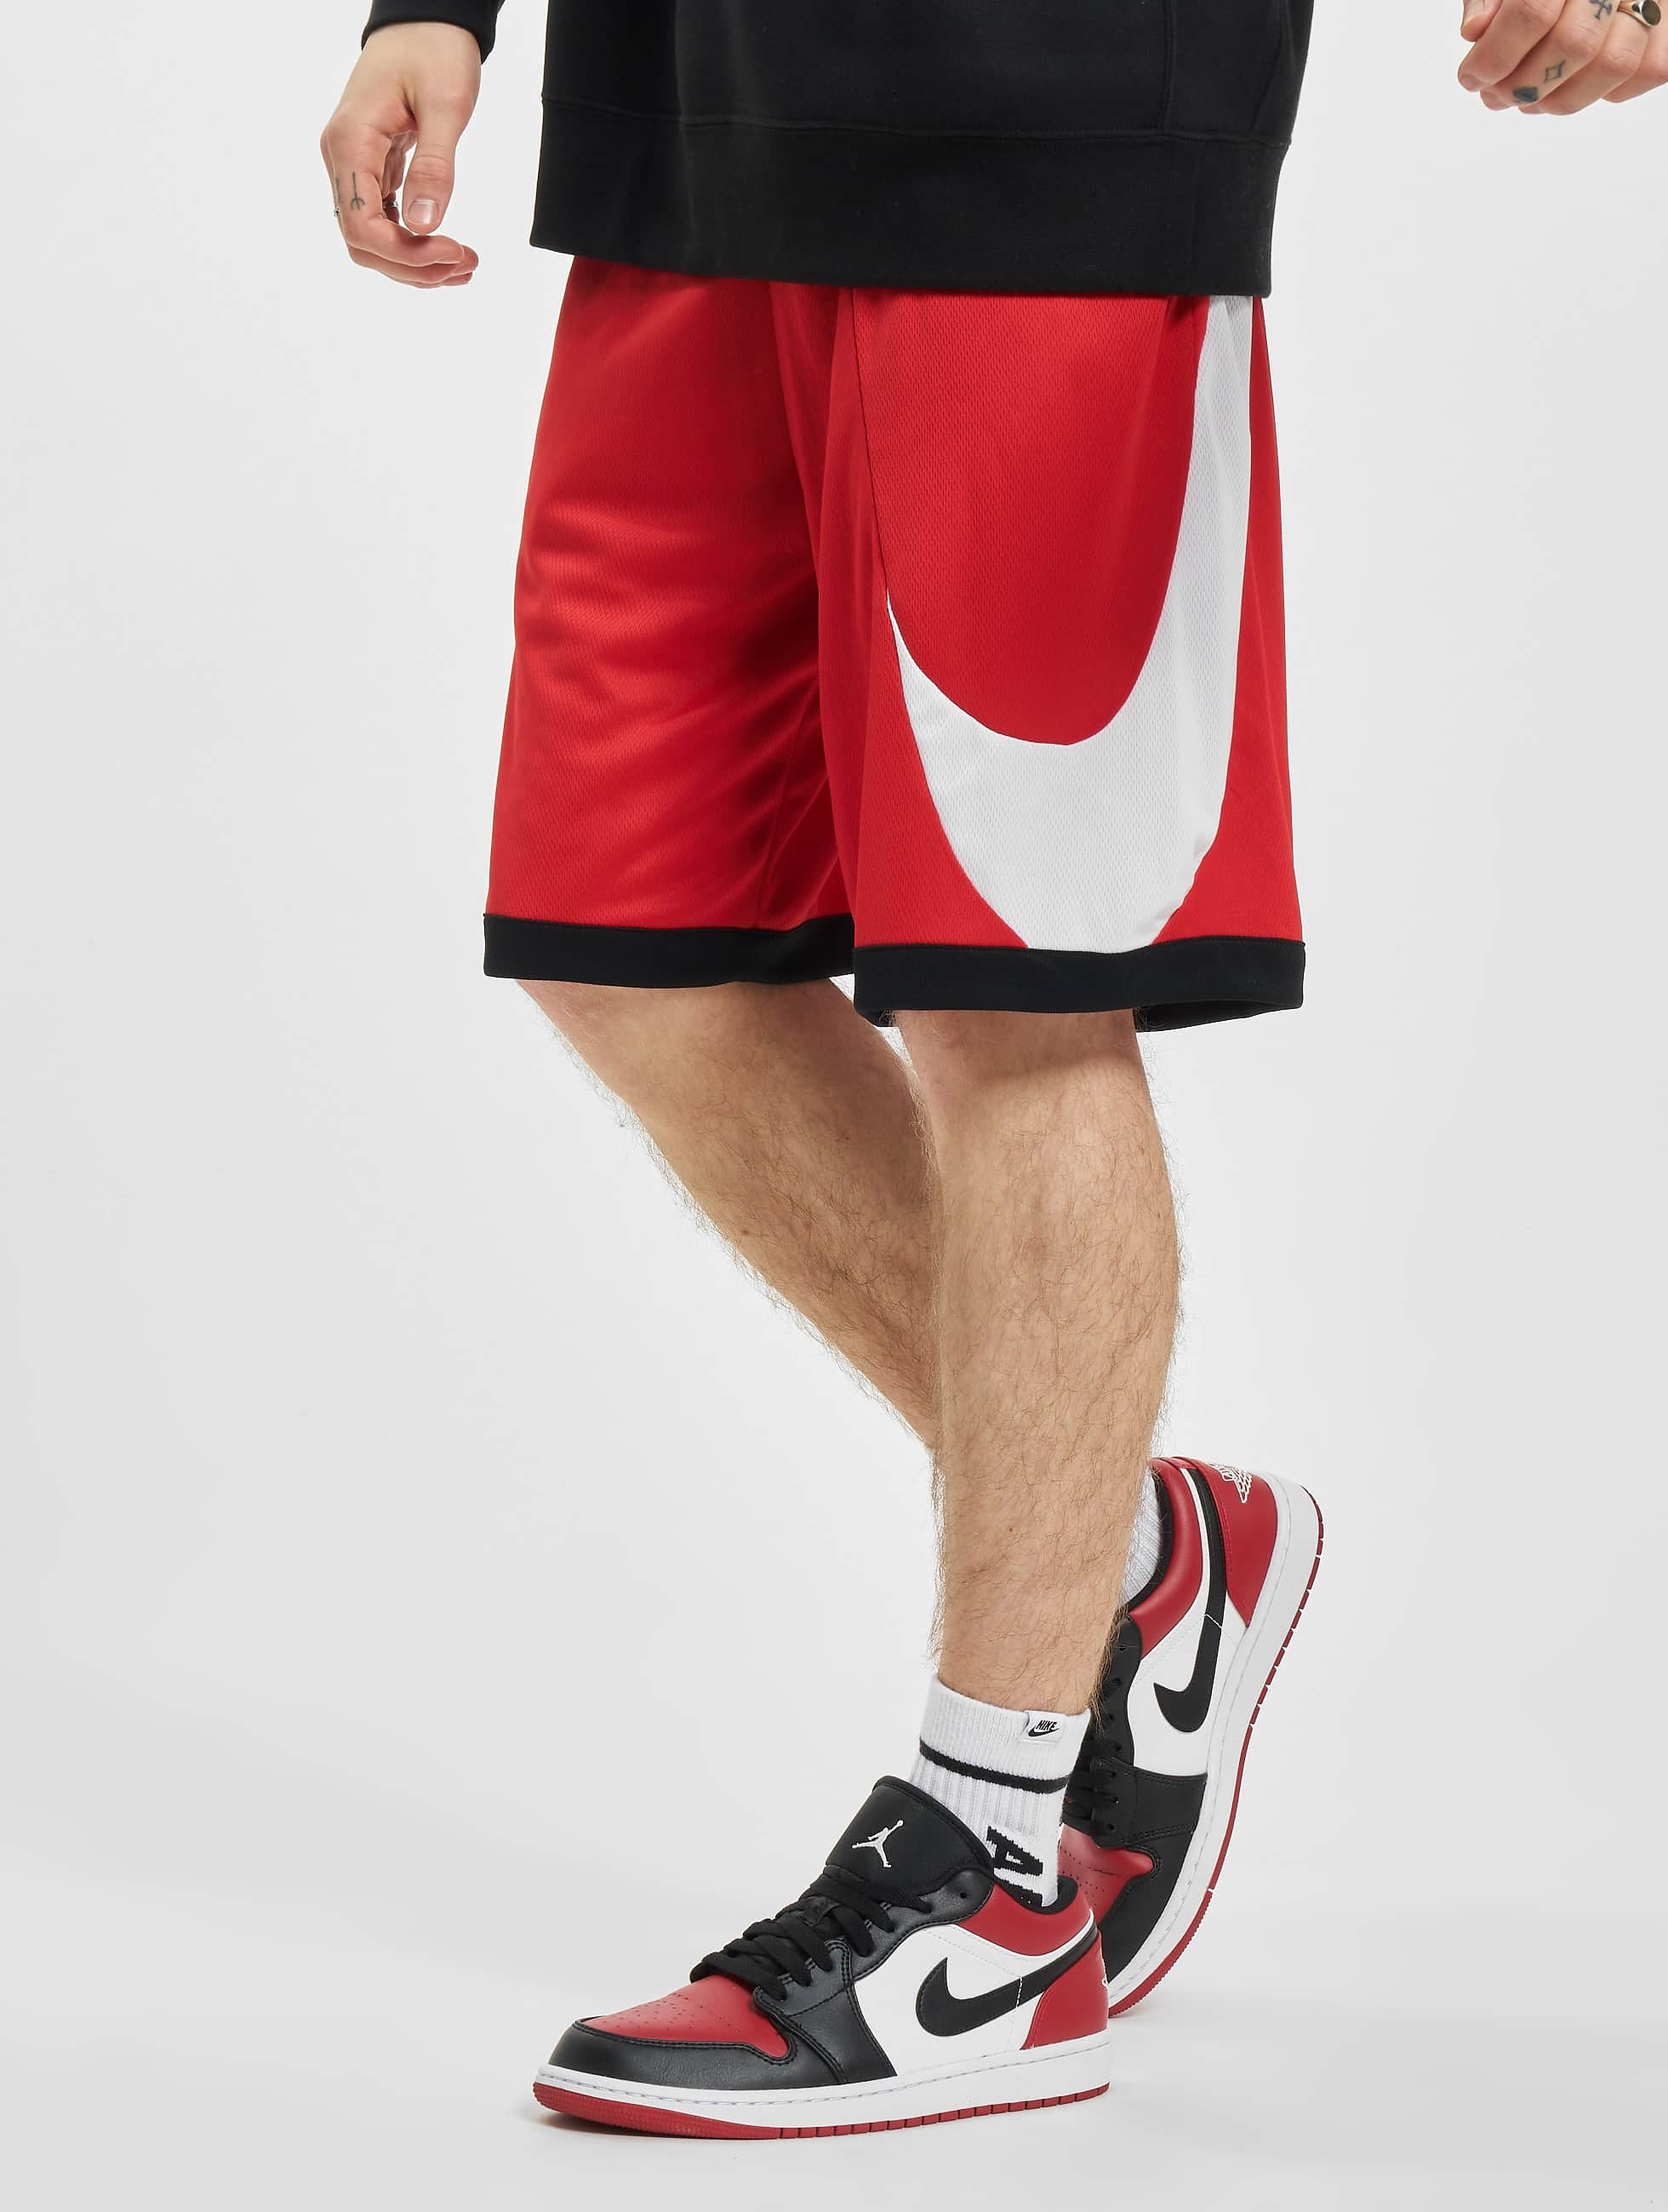 black red and white jordan shorts